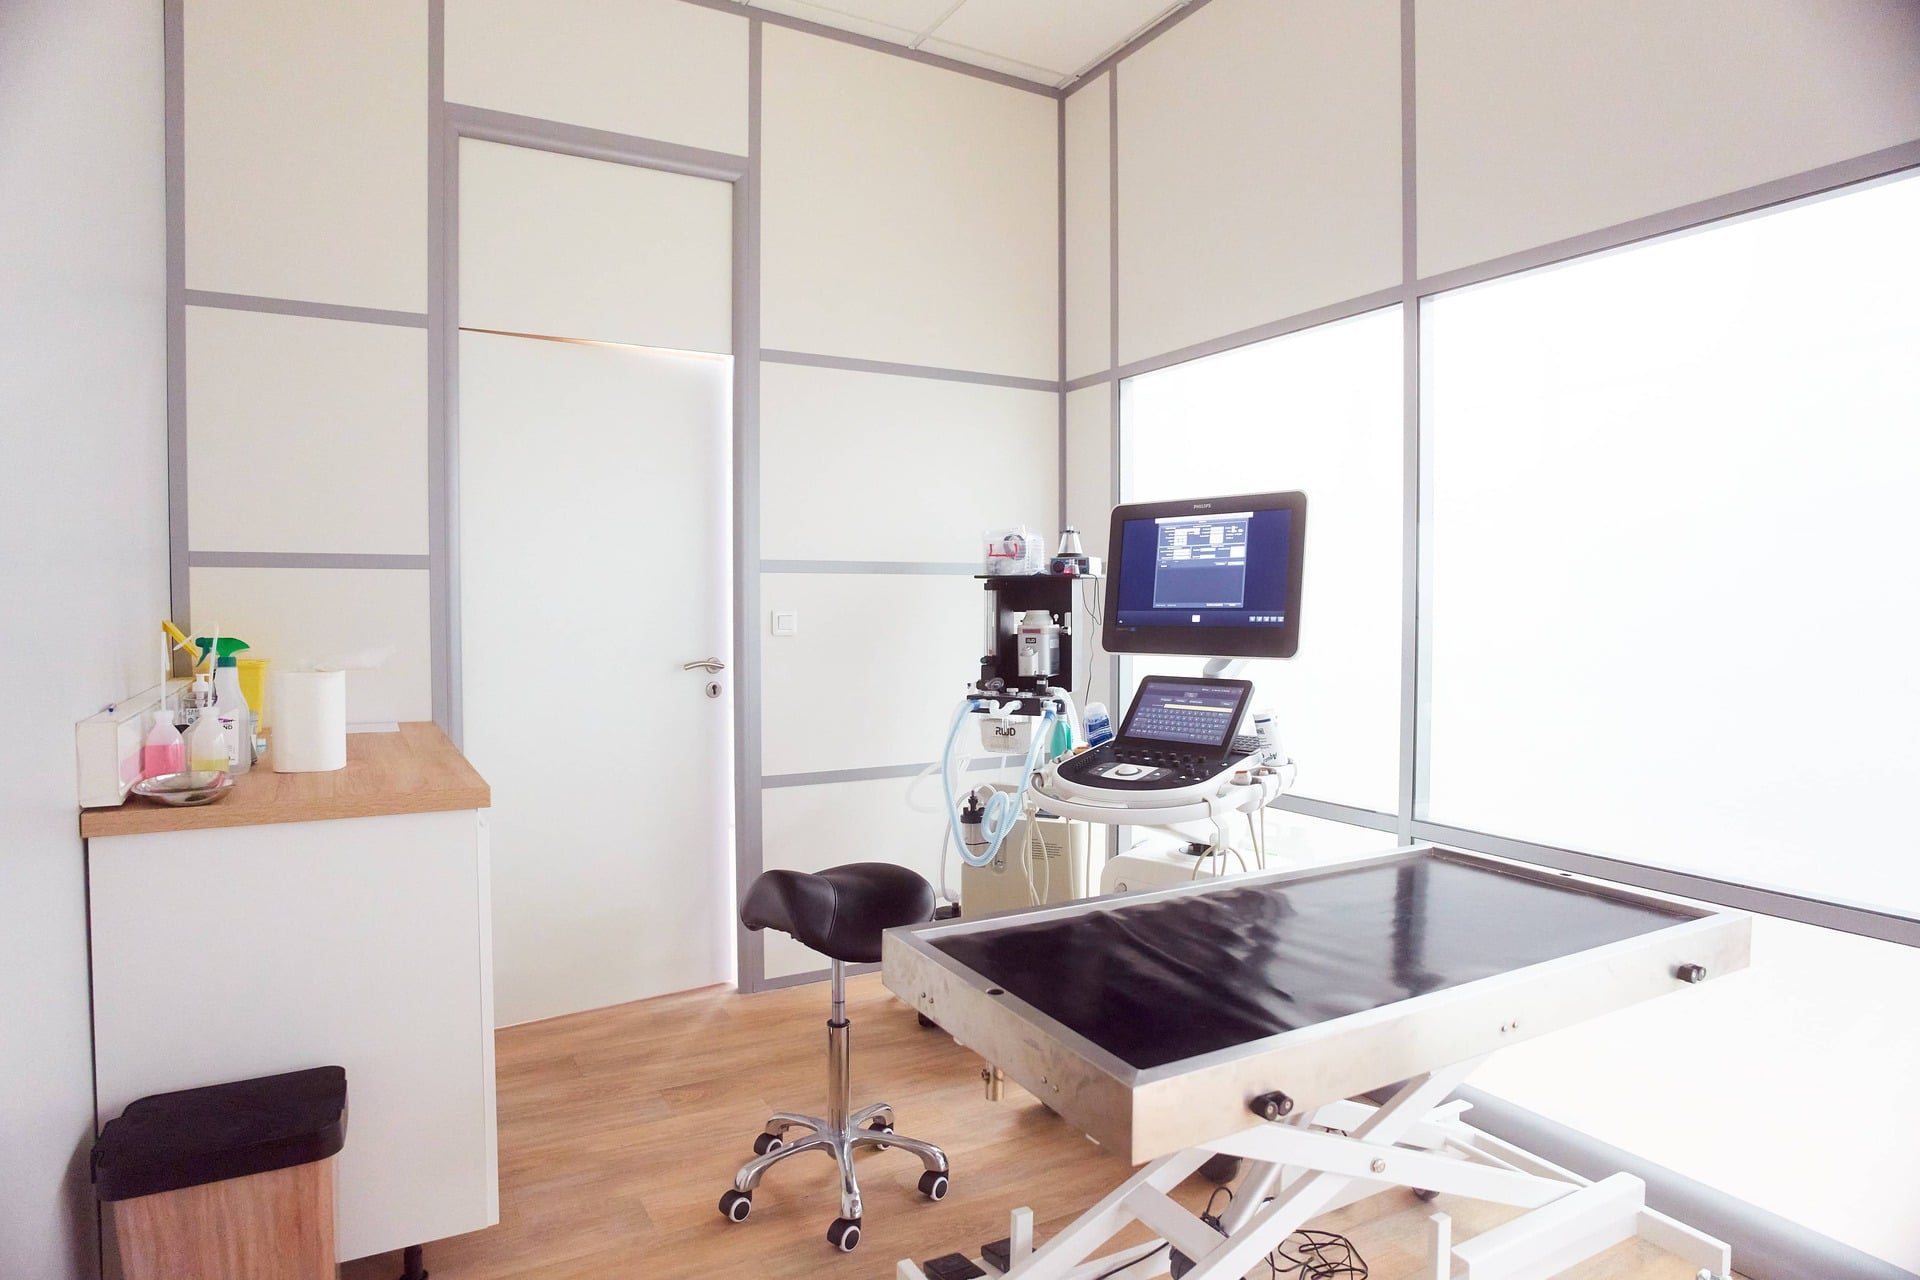 salle cardiologie clinique val europe 01 - Cardiologie